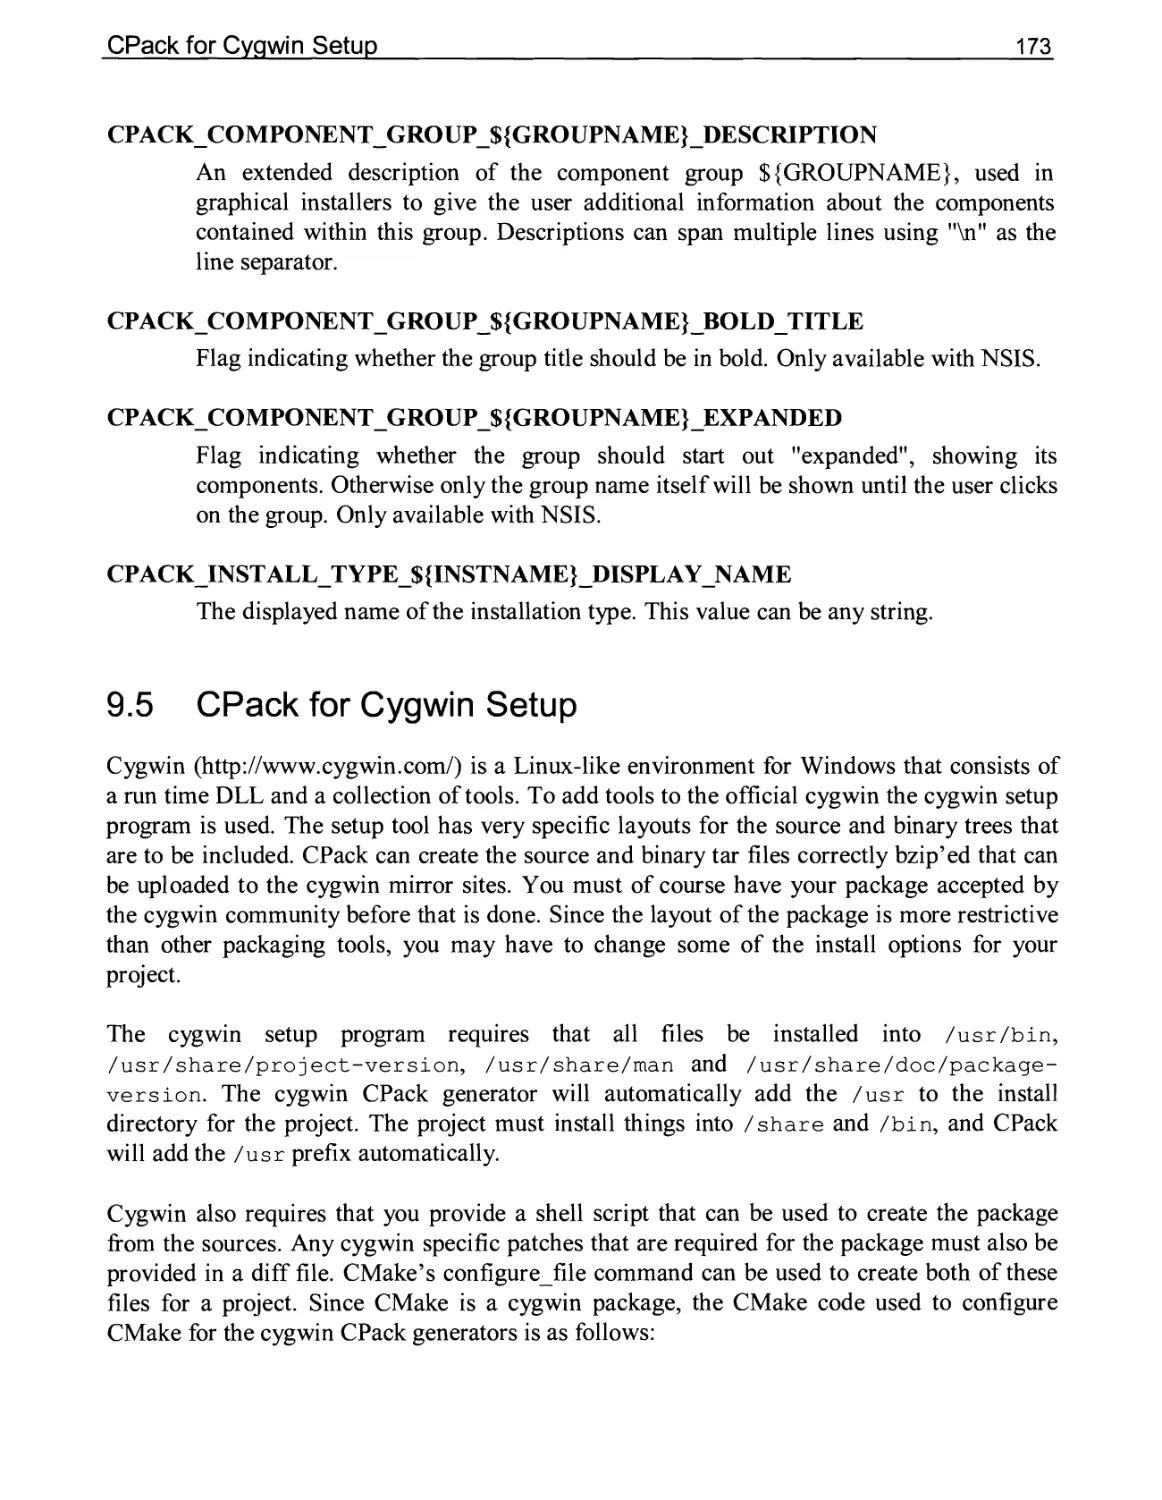 9.5 CPack for Cygwin Setup